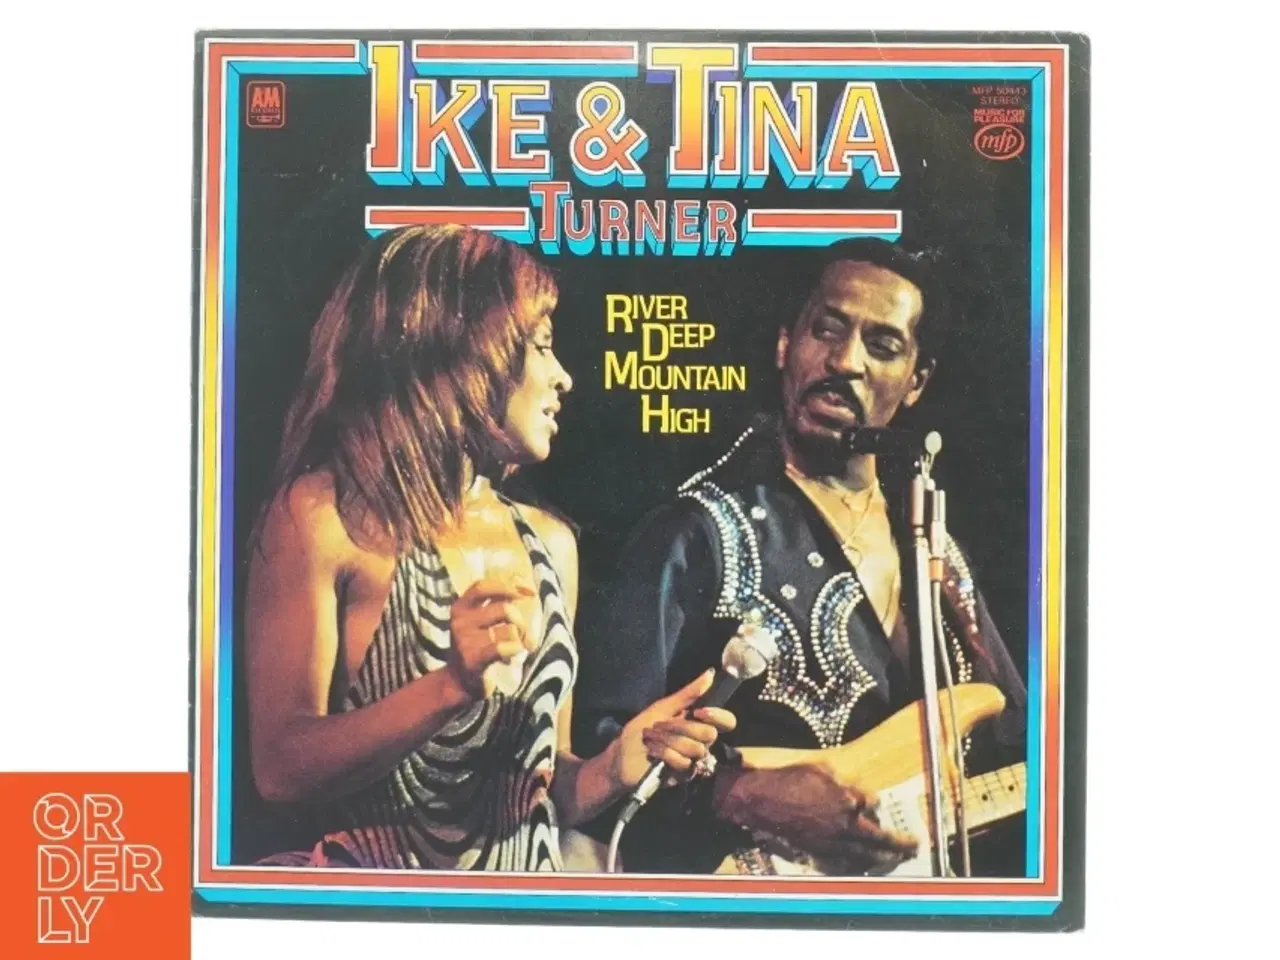 Billede 1 - Ike & Tina Turner - River Deep Mountain High Vinyl LP fra Music For Pleasure (str. 31 x 31 cm)